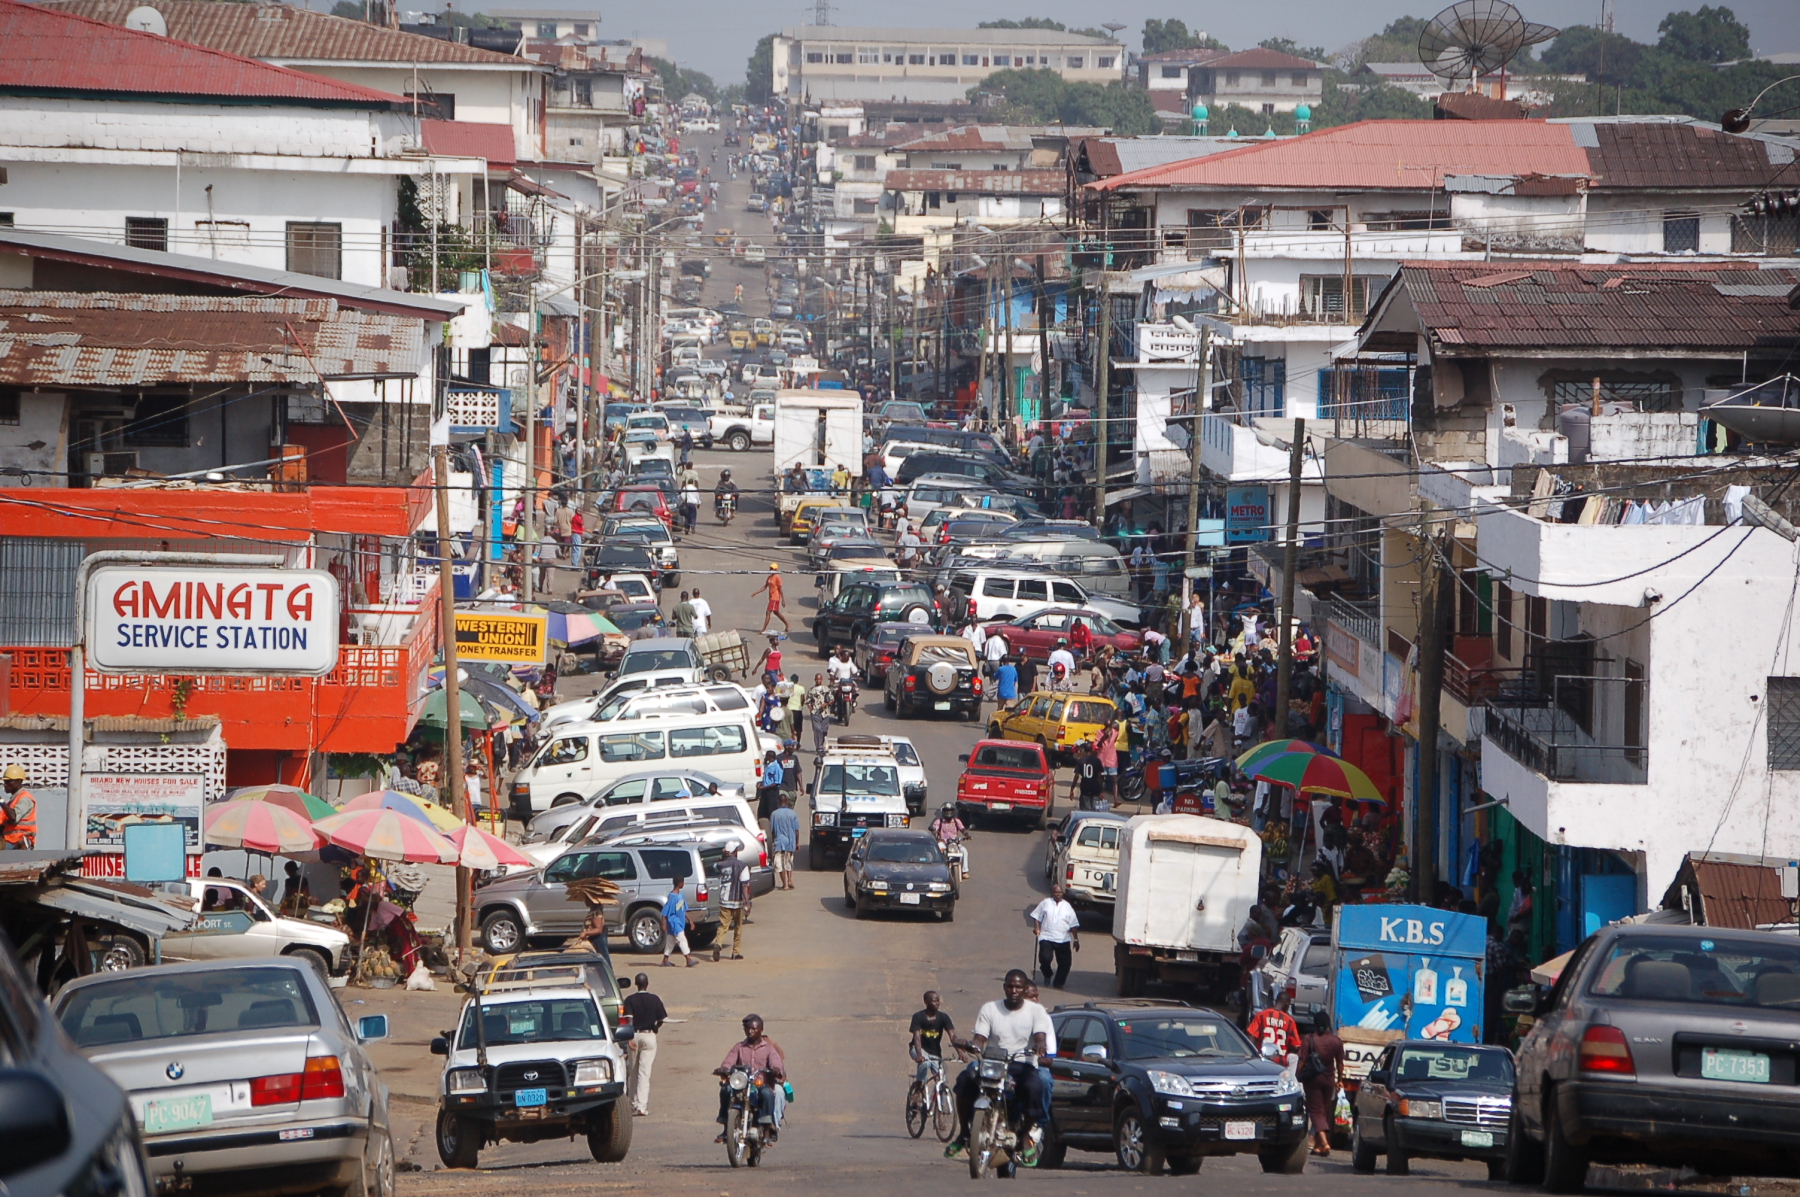 Downtown Monrovia